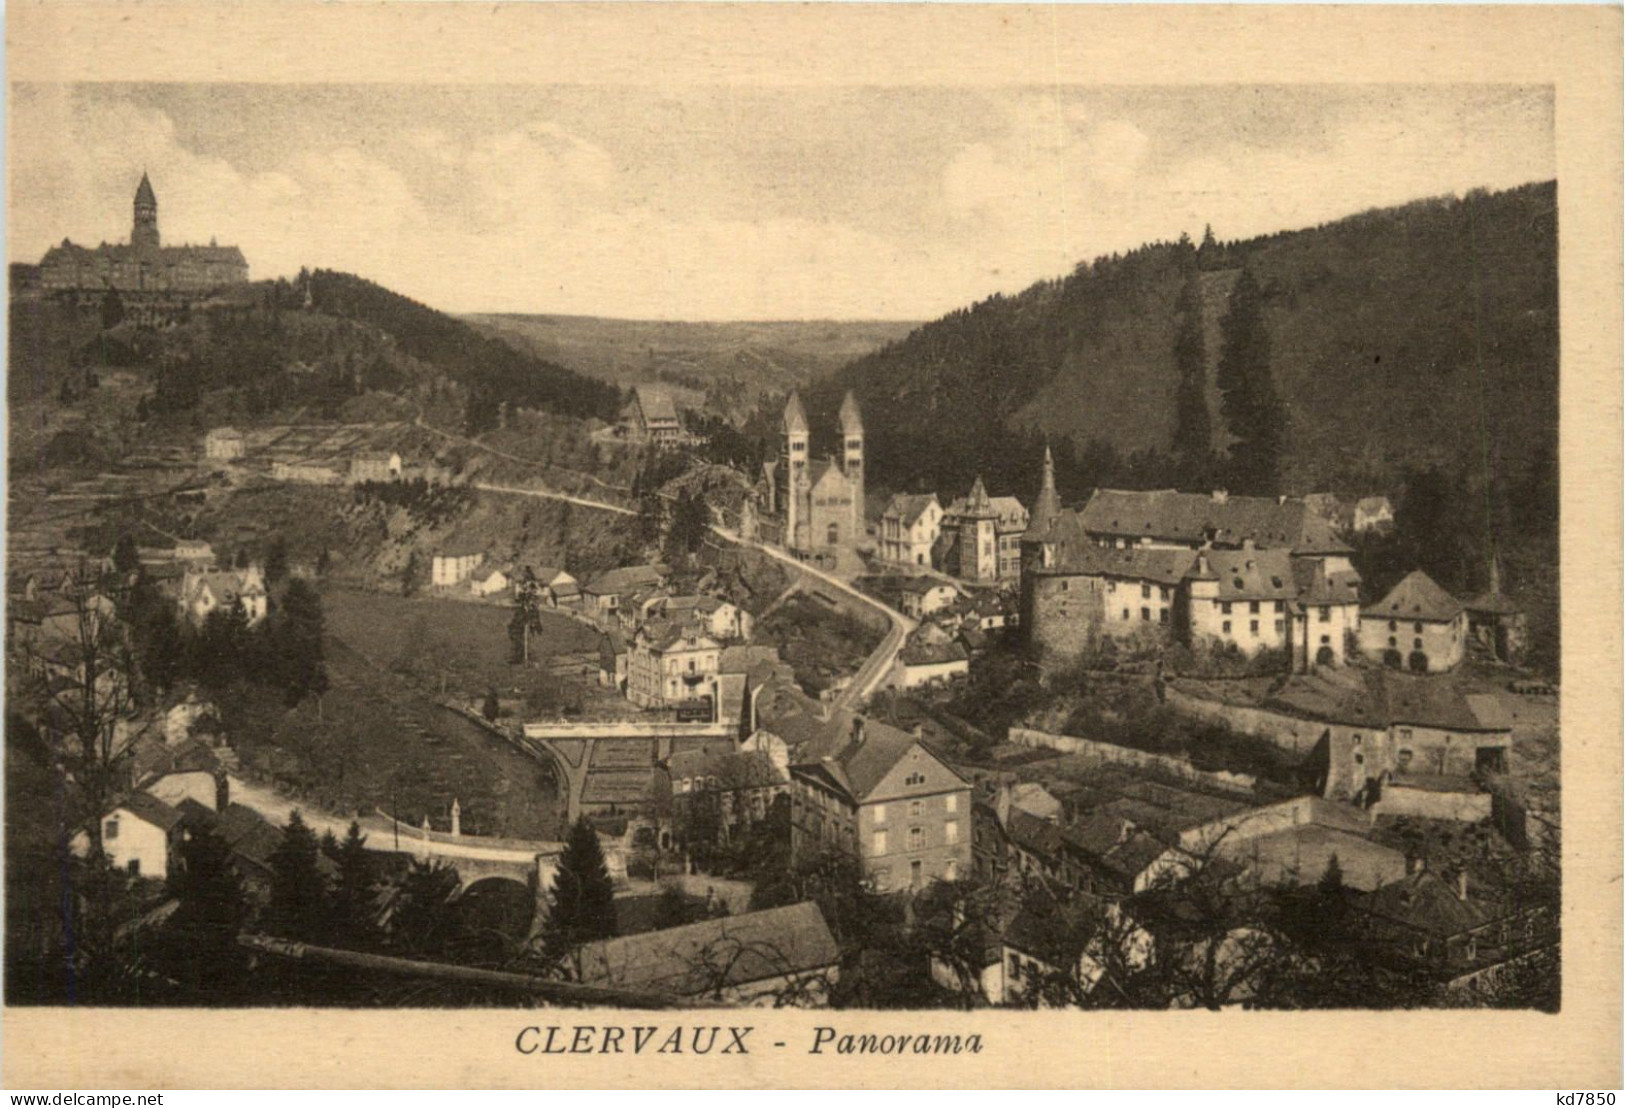 Clerbaux - Clervaux